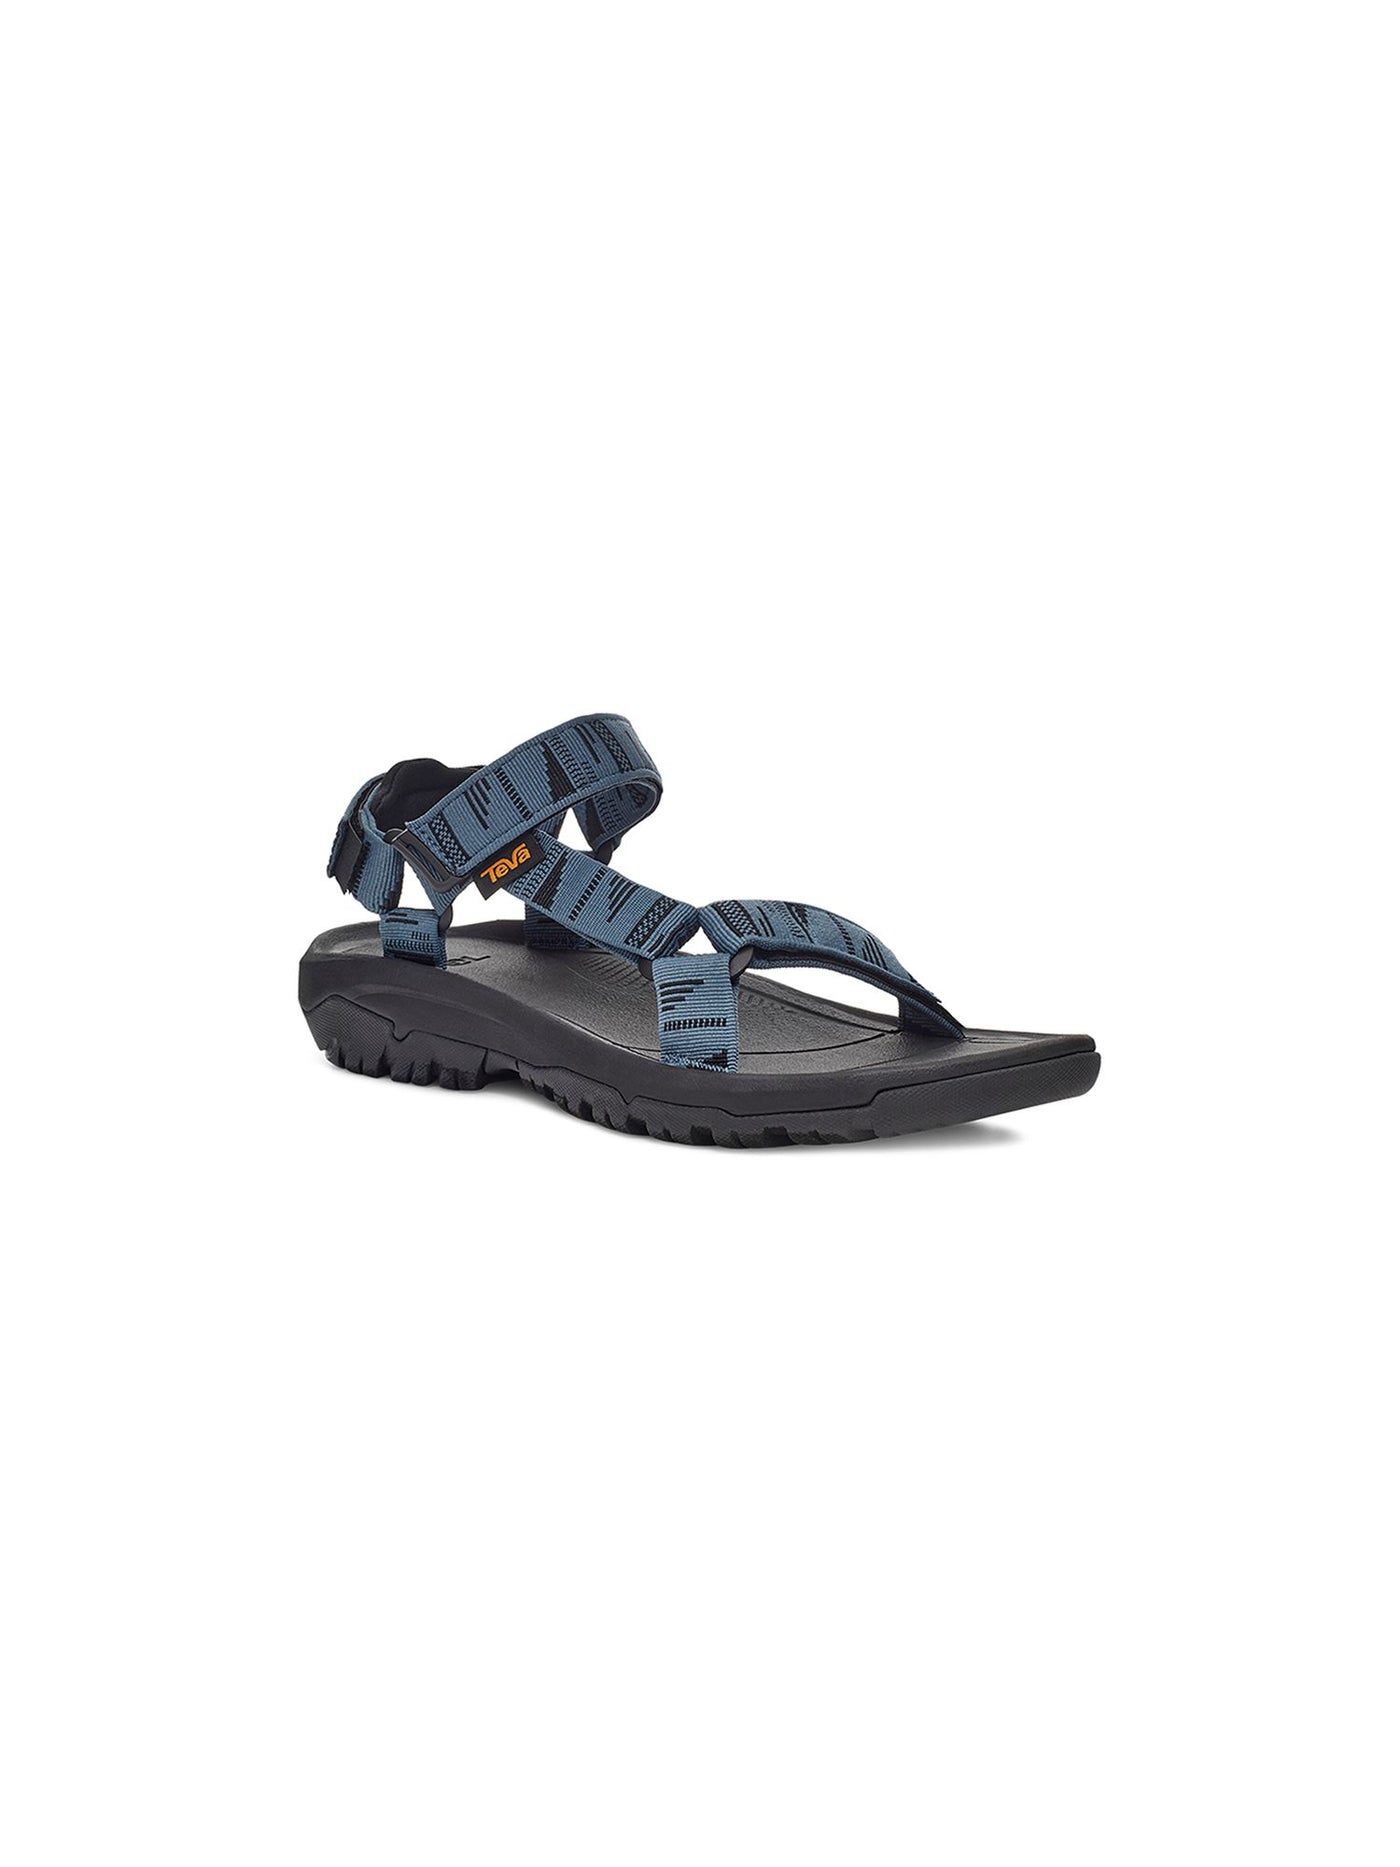 TEVA Mens Blue Printed Padded Water Resistant Non-Slip Hurricane Xlt2 Open Toe Sandals Shoes 9